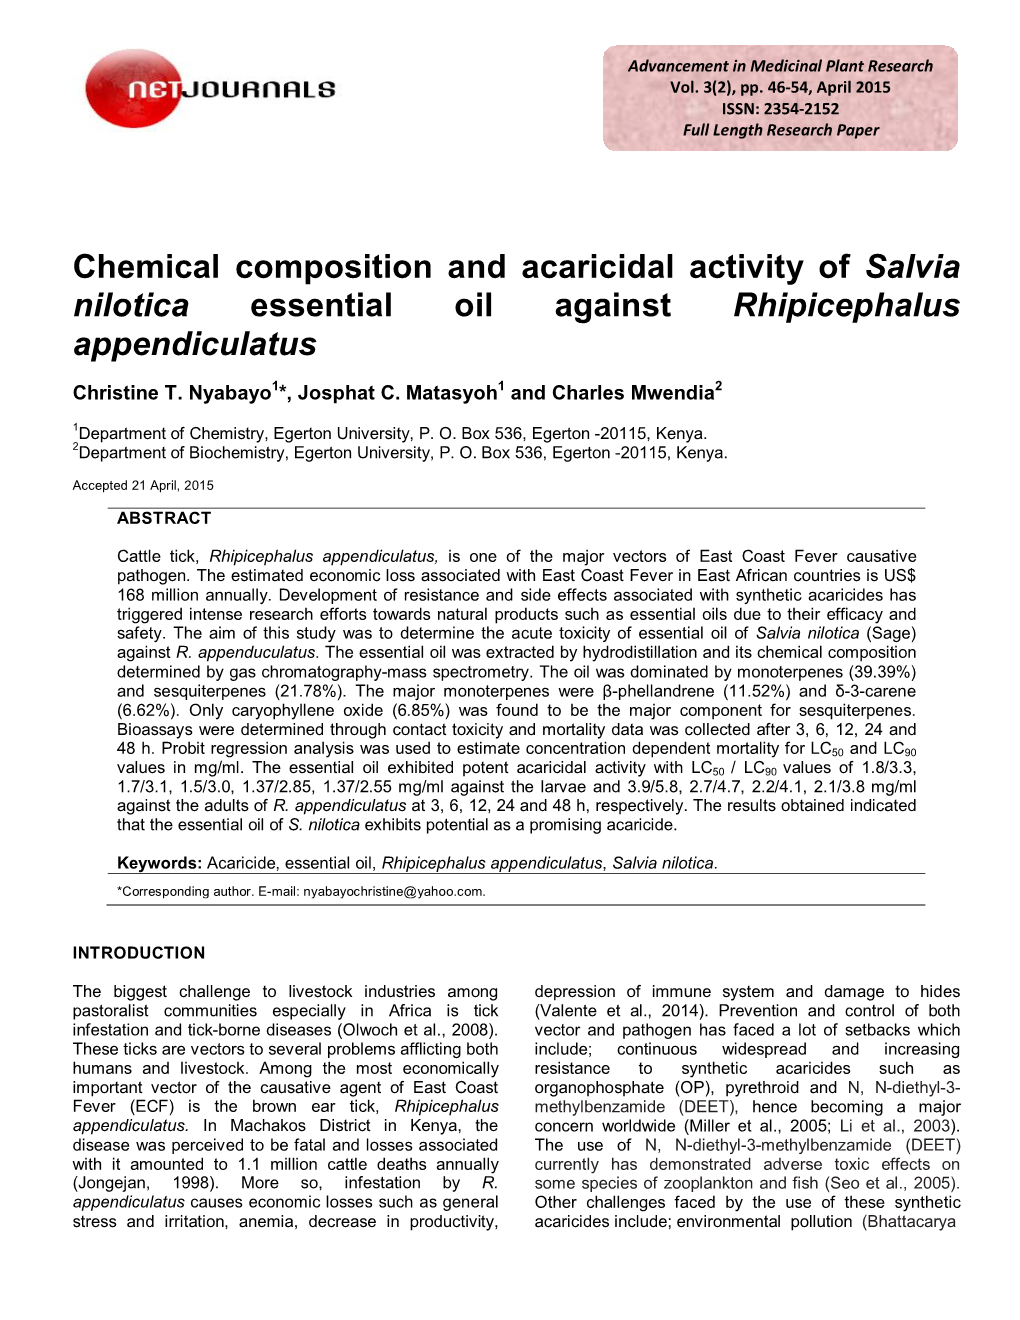 Chemical Composition and Acaricidal Activity of Salvia Nilotica Essential Oil Against Rhipicephalus Appendiculatus